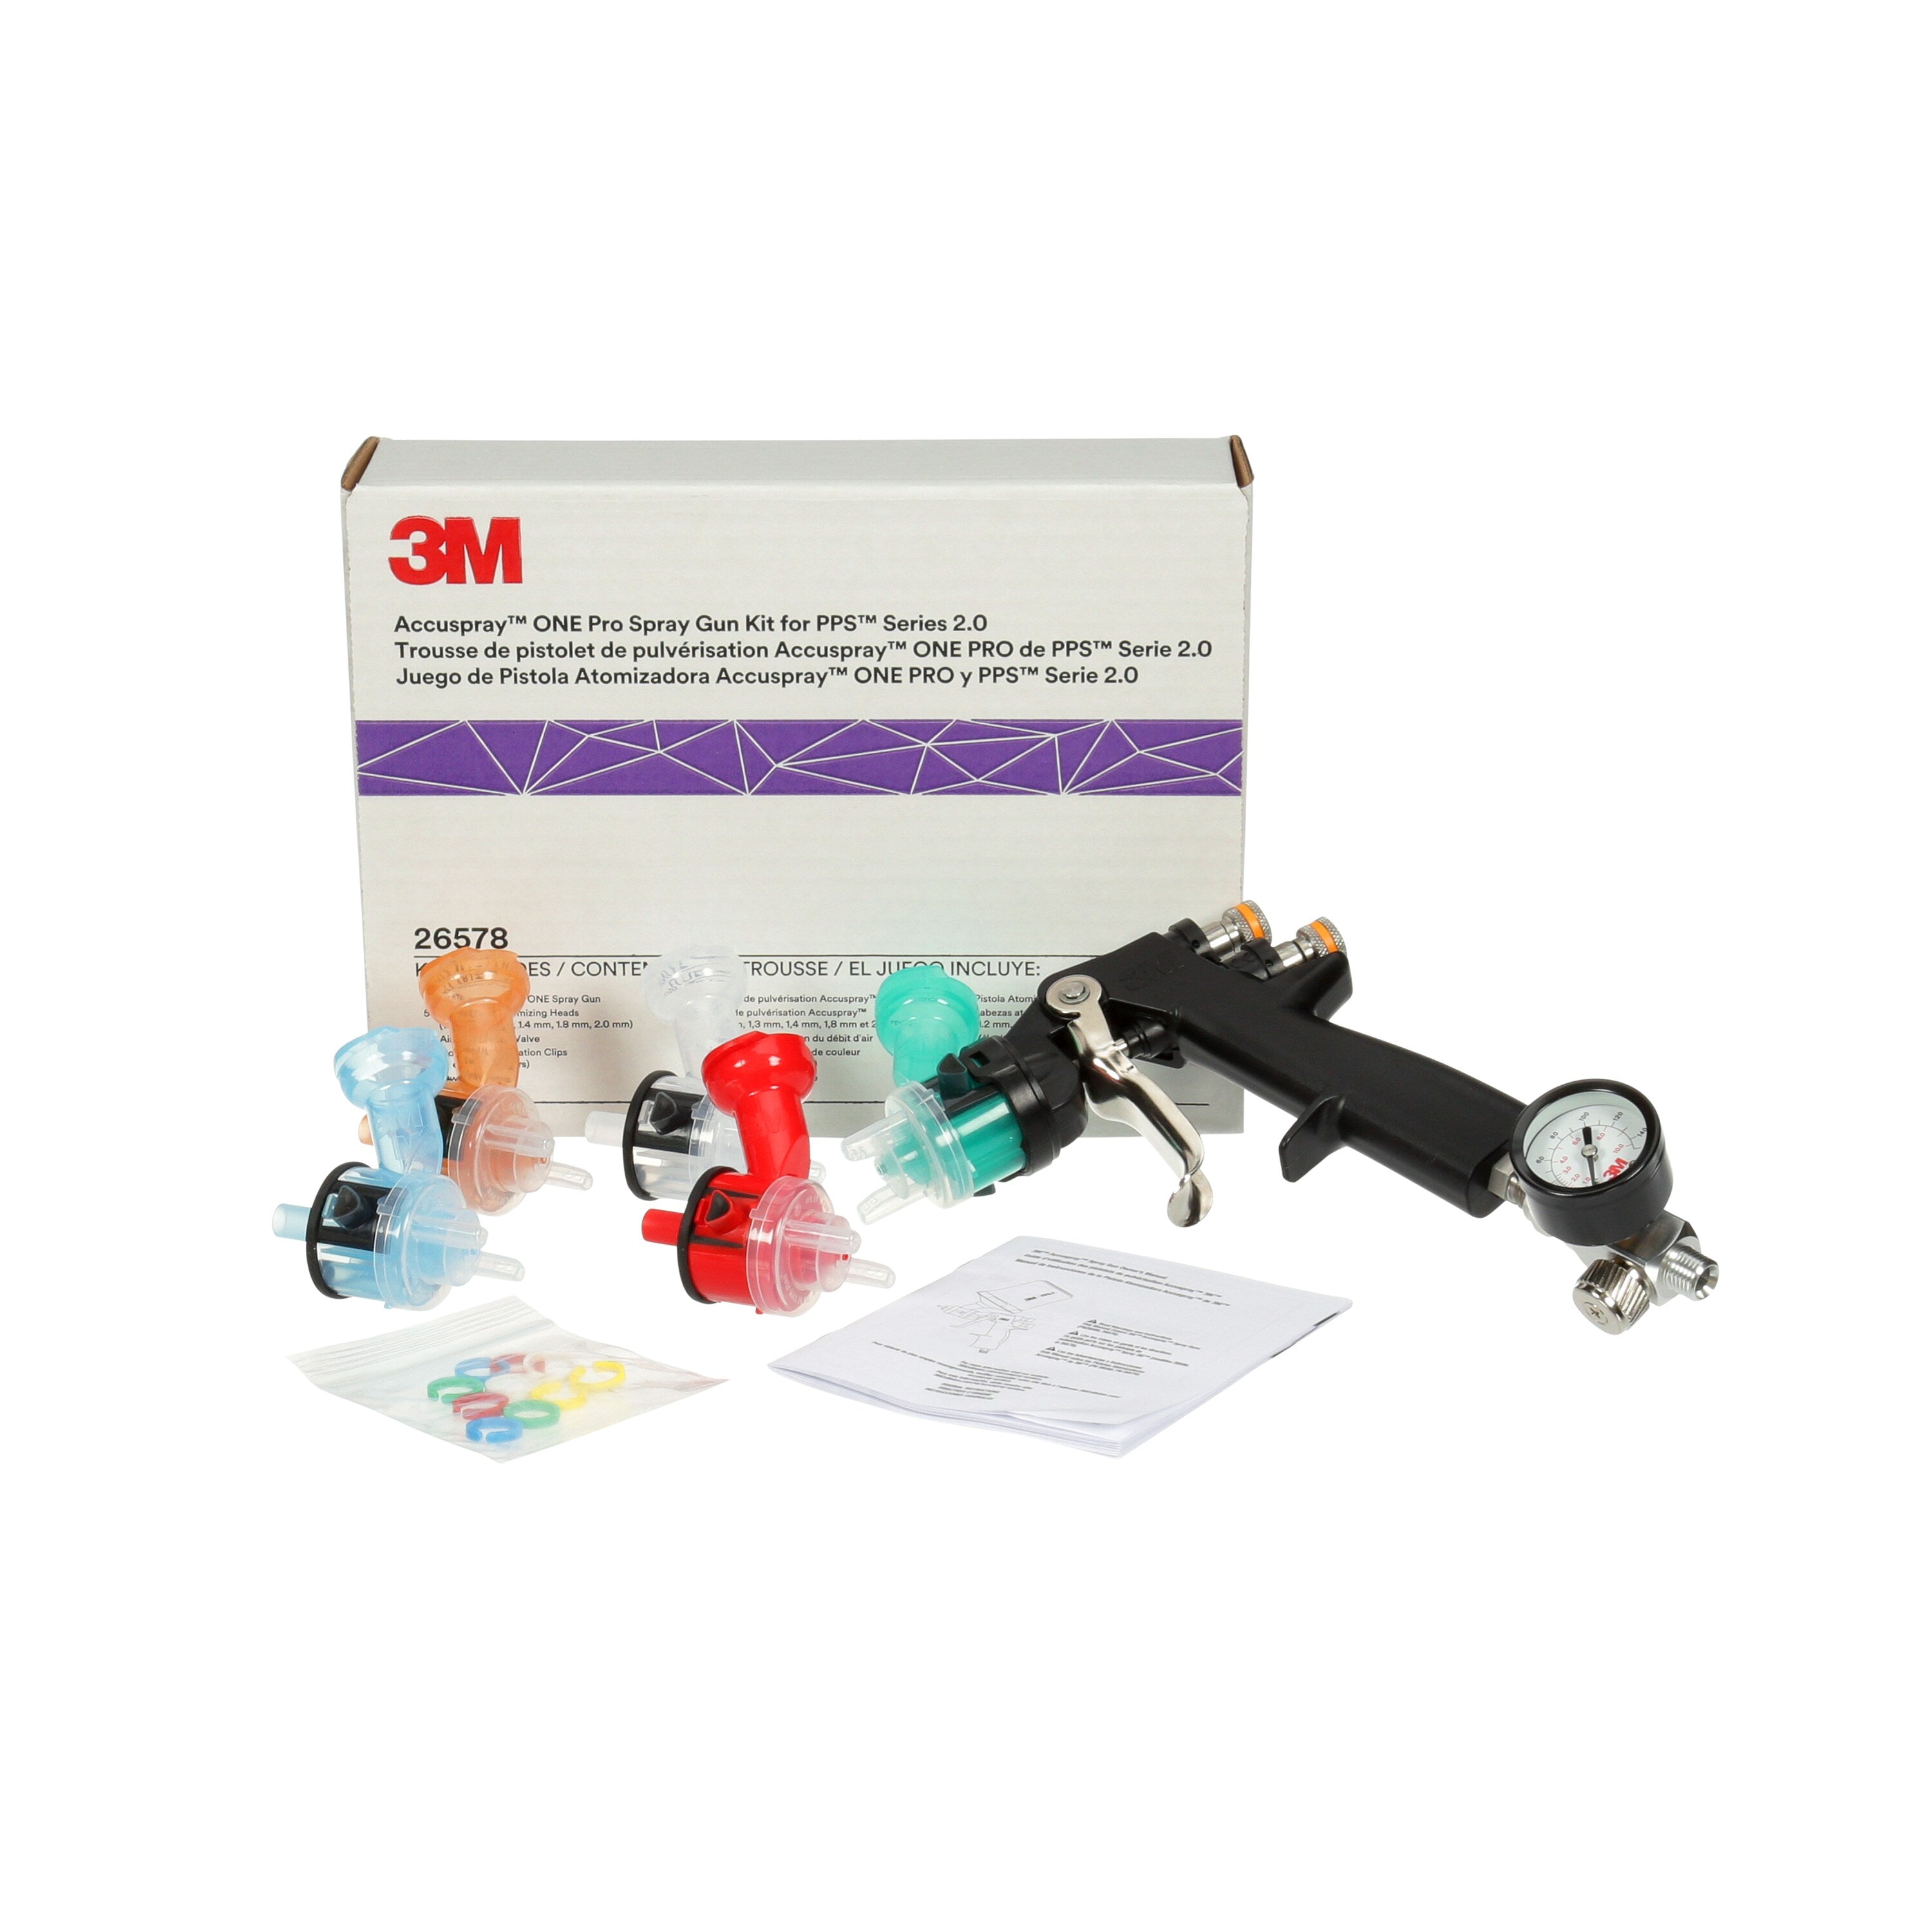 3M™ Accuspray™ ONE Pro Spray Gun Kit for PPS™ Series 2.0, 26578